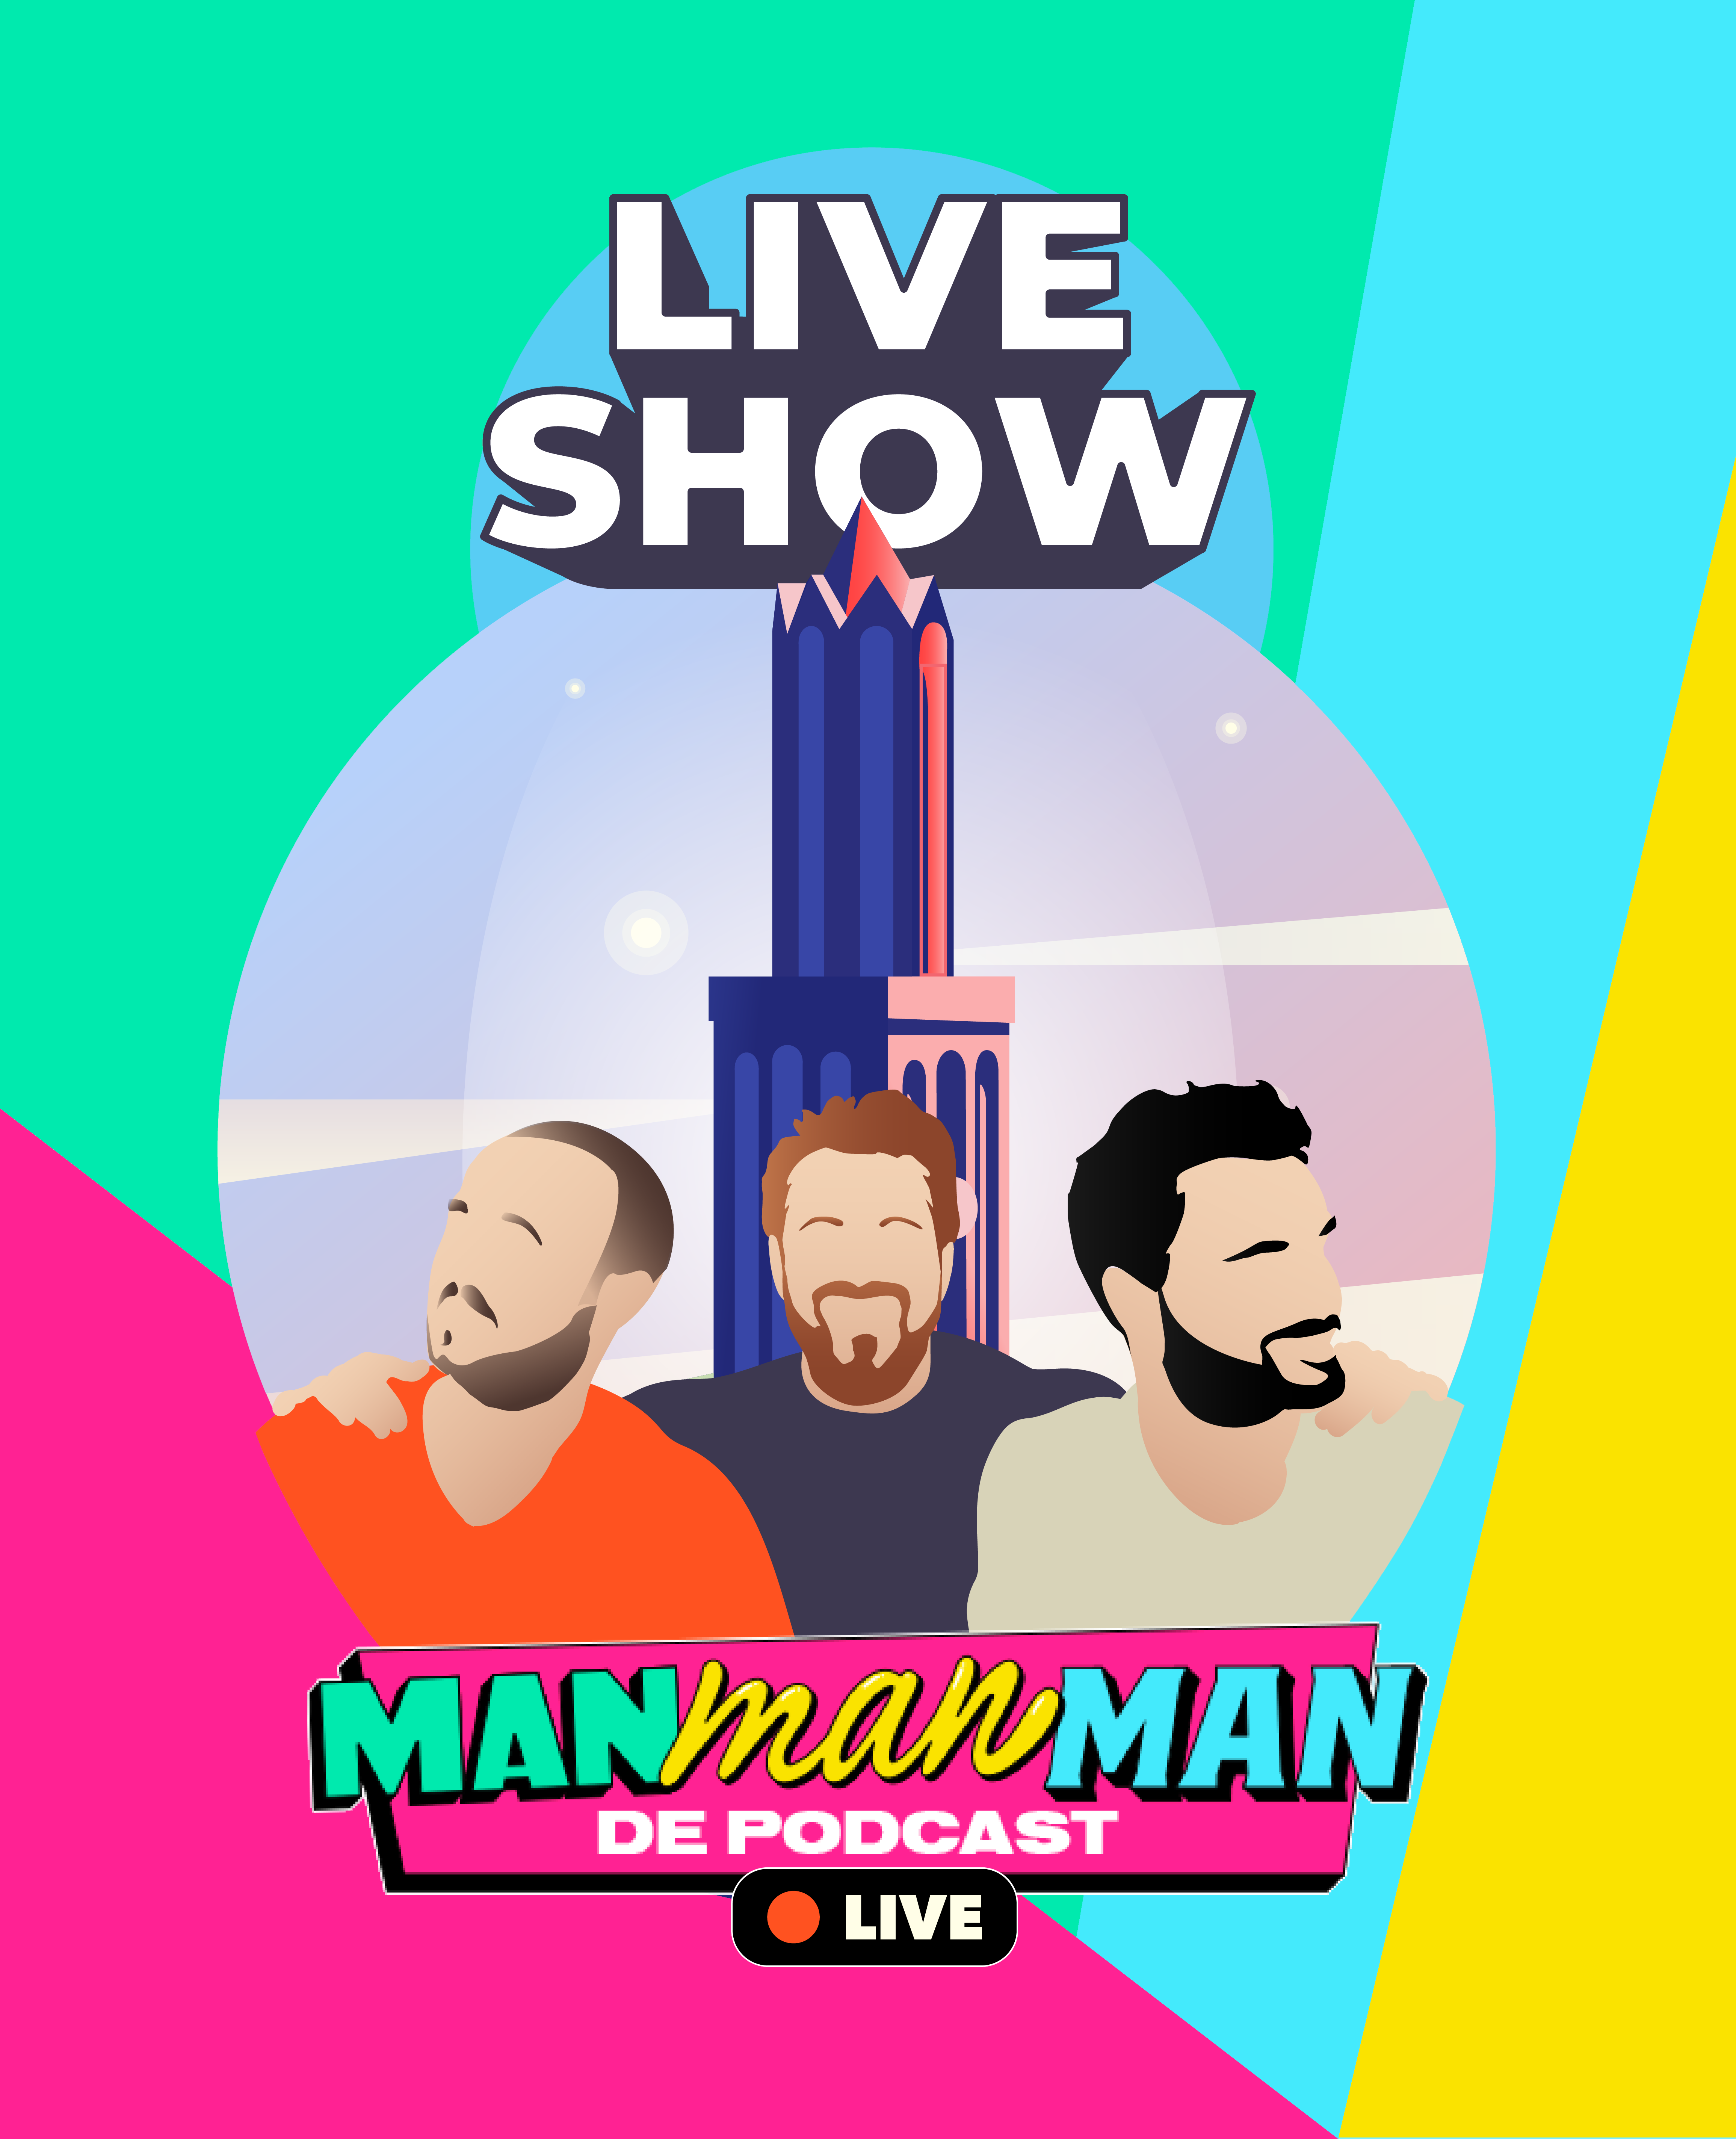 Man man man, de podcast live in de Dom